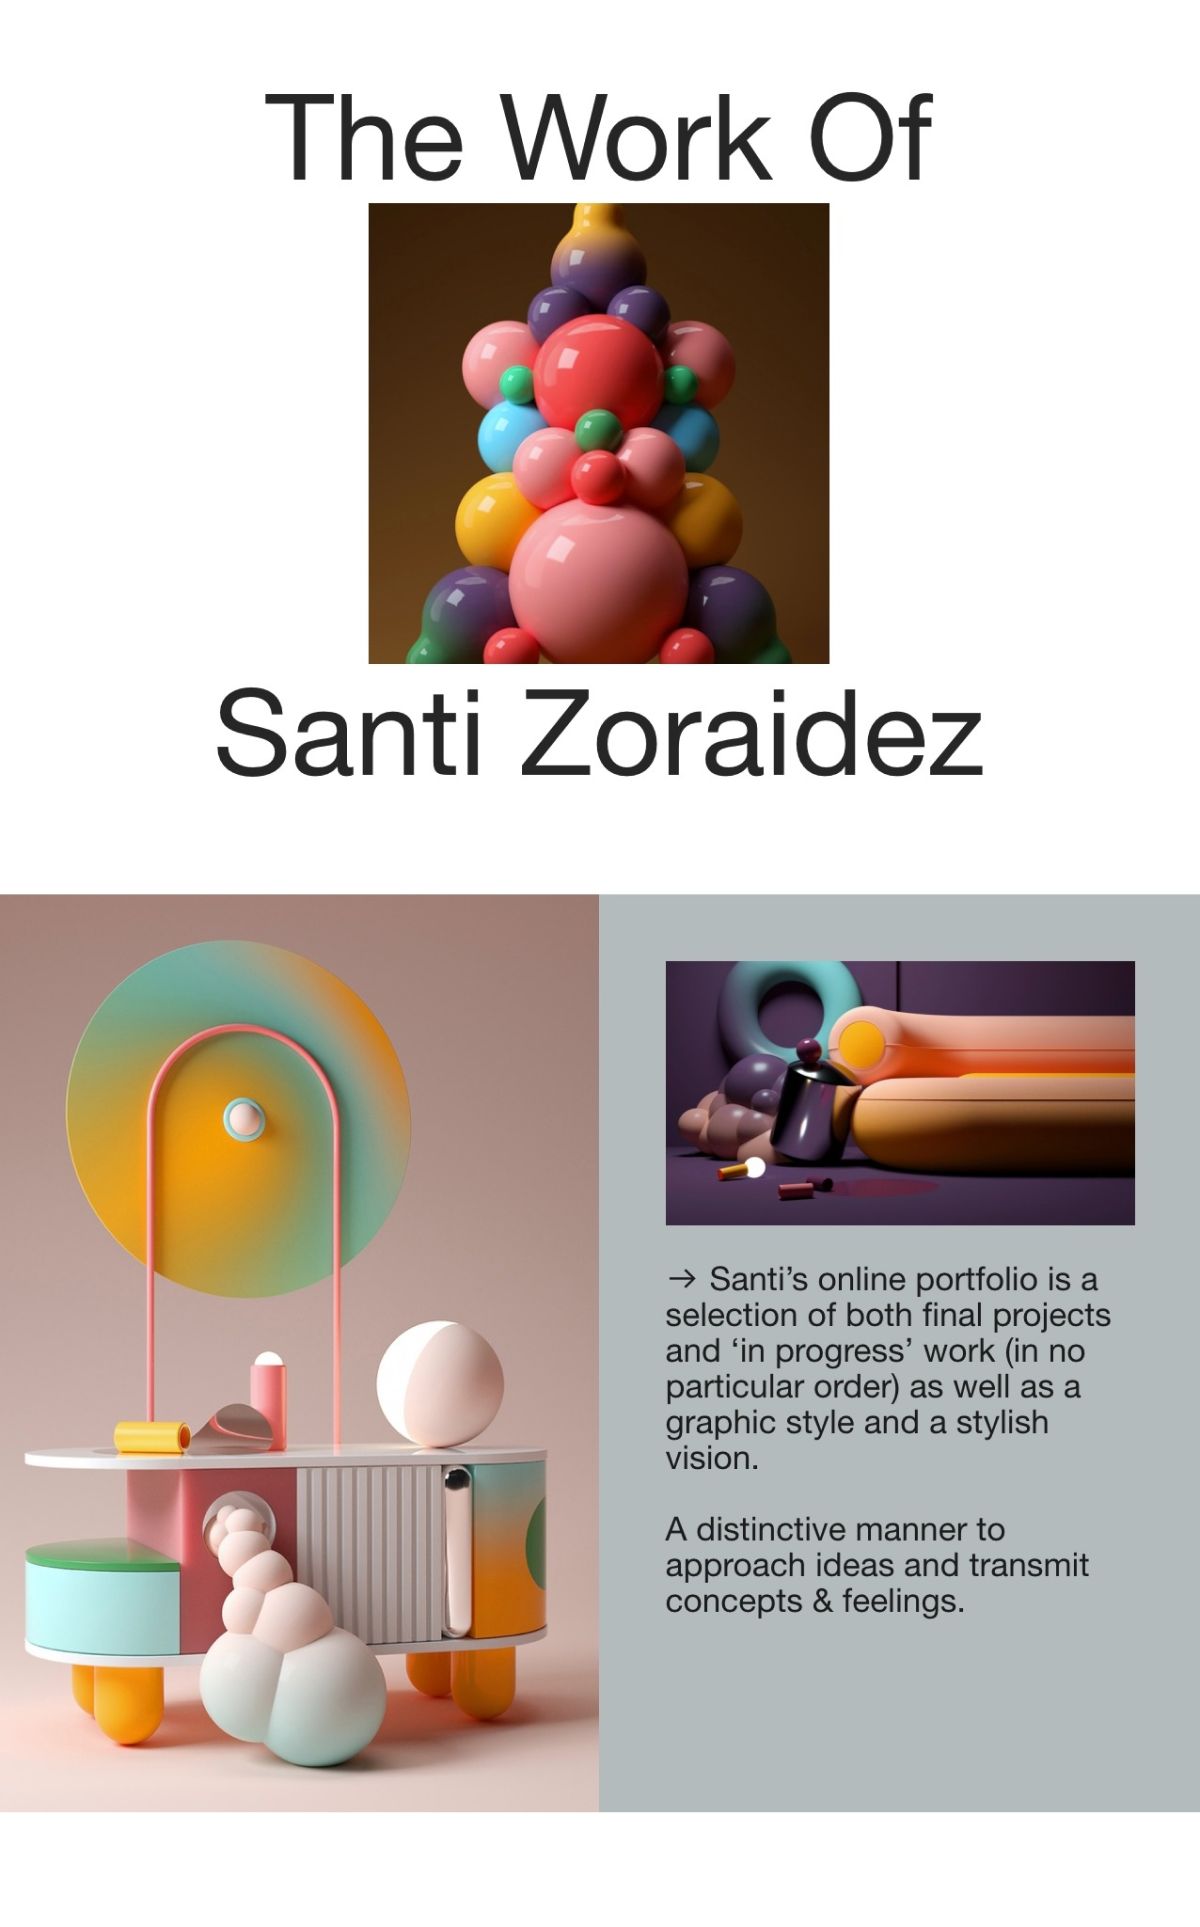 Santi Zoraidez